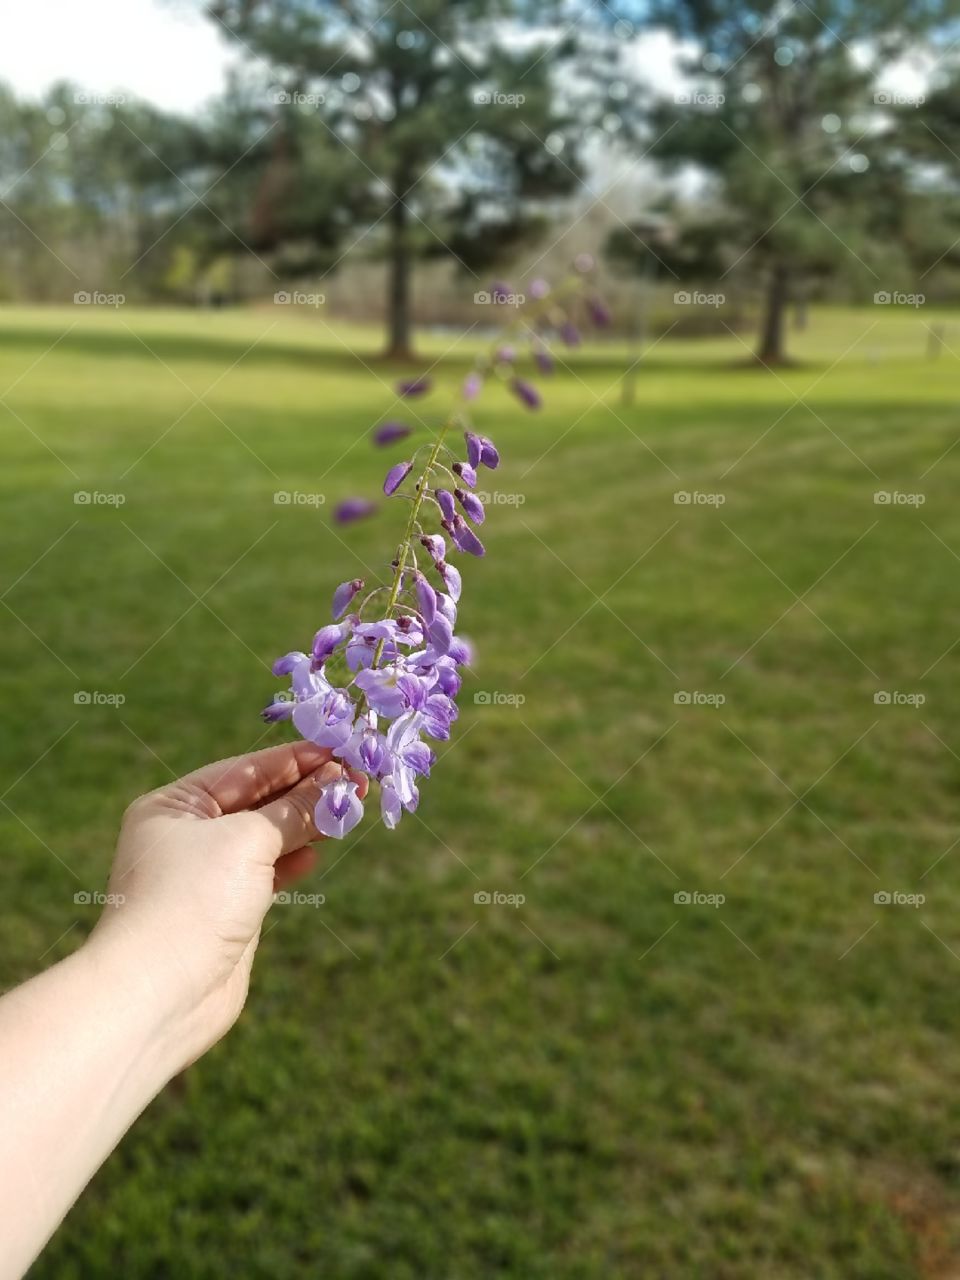 Blurry purple flowers